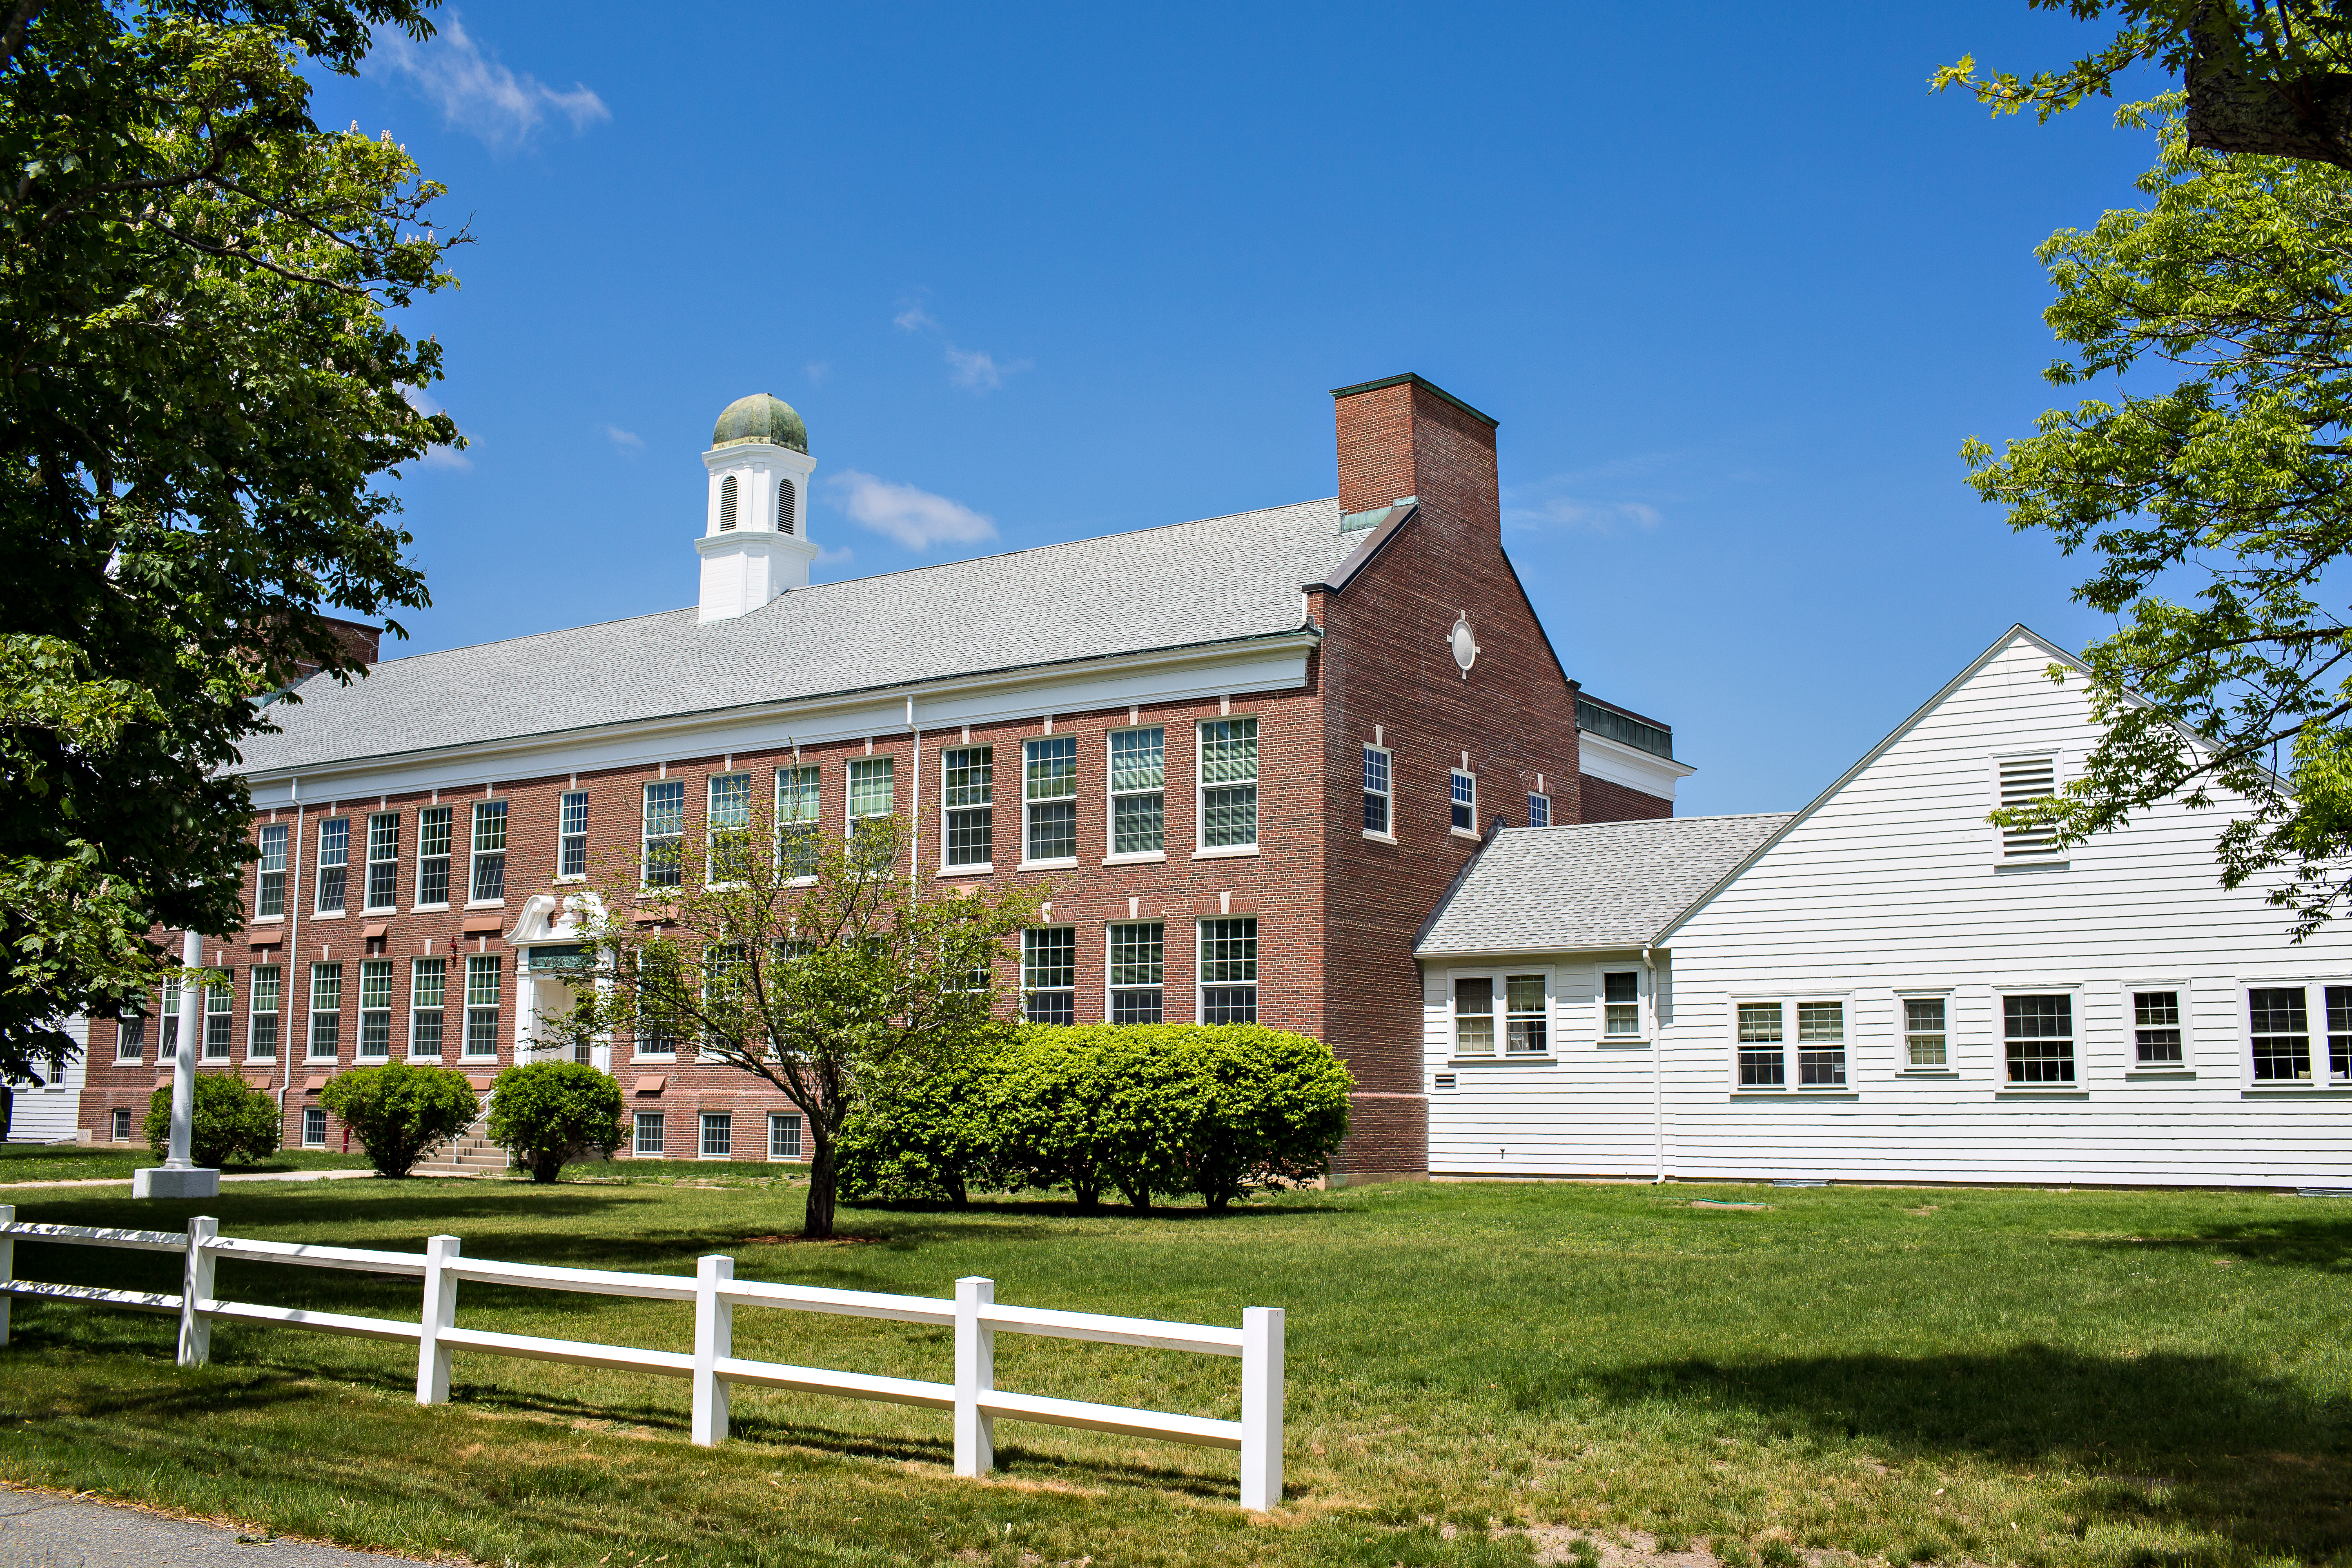 Simpkins School Residences